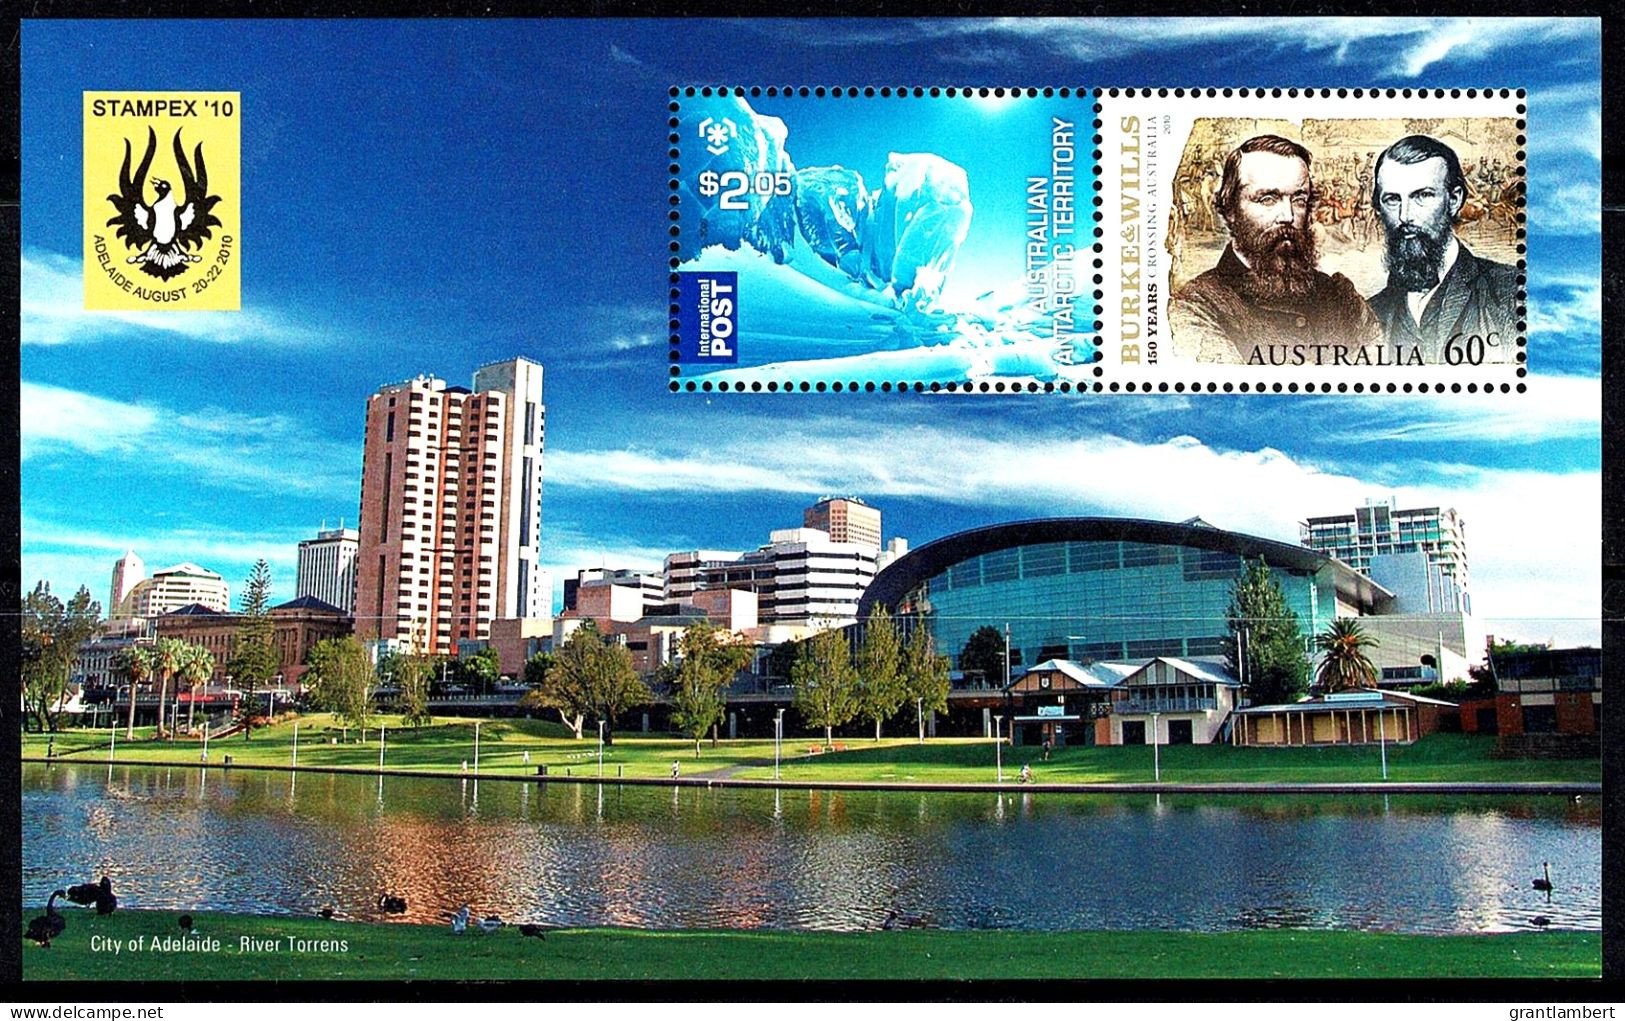 Australia 2010 STAMPEX '10 Adelaide  Minisheet MNH - Mint Stamps